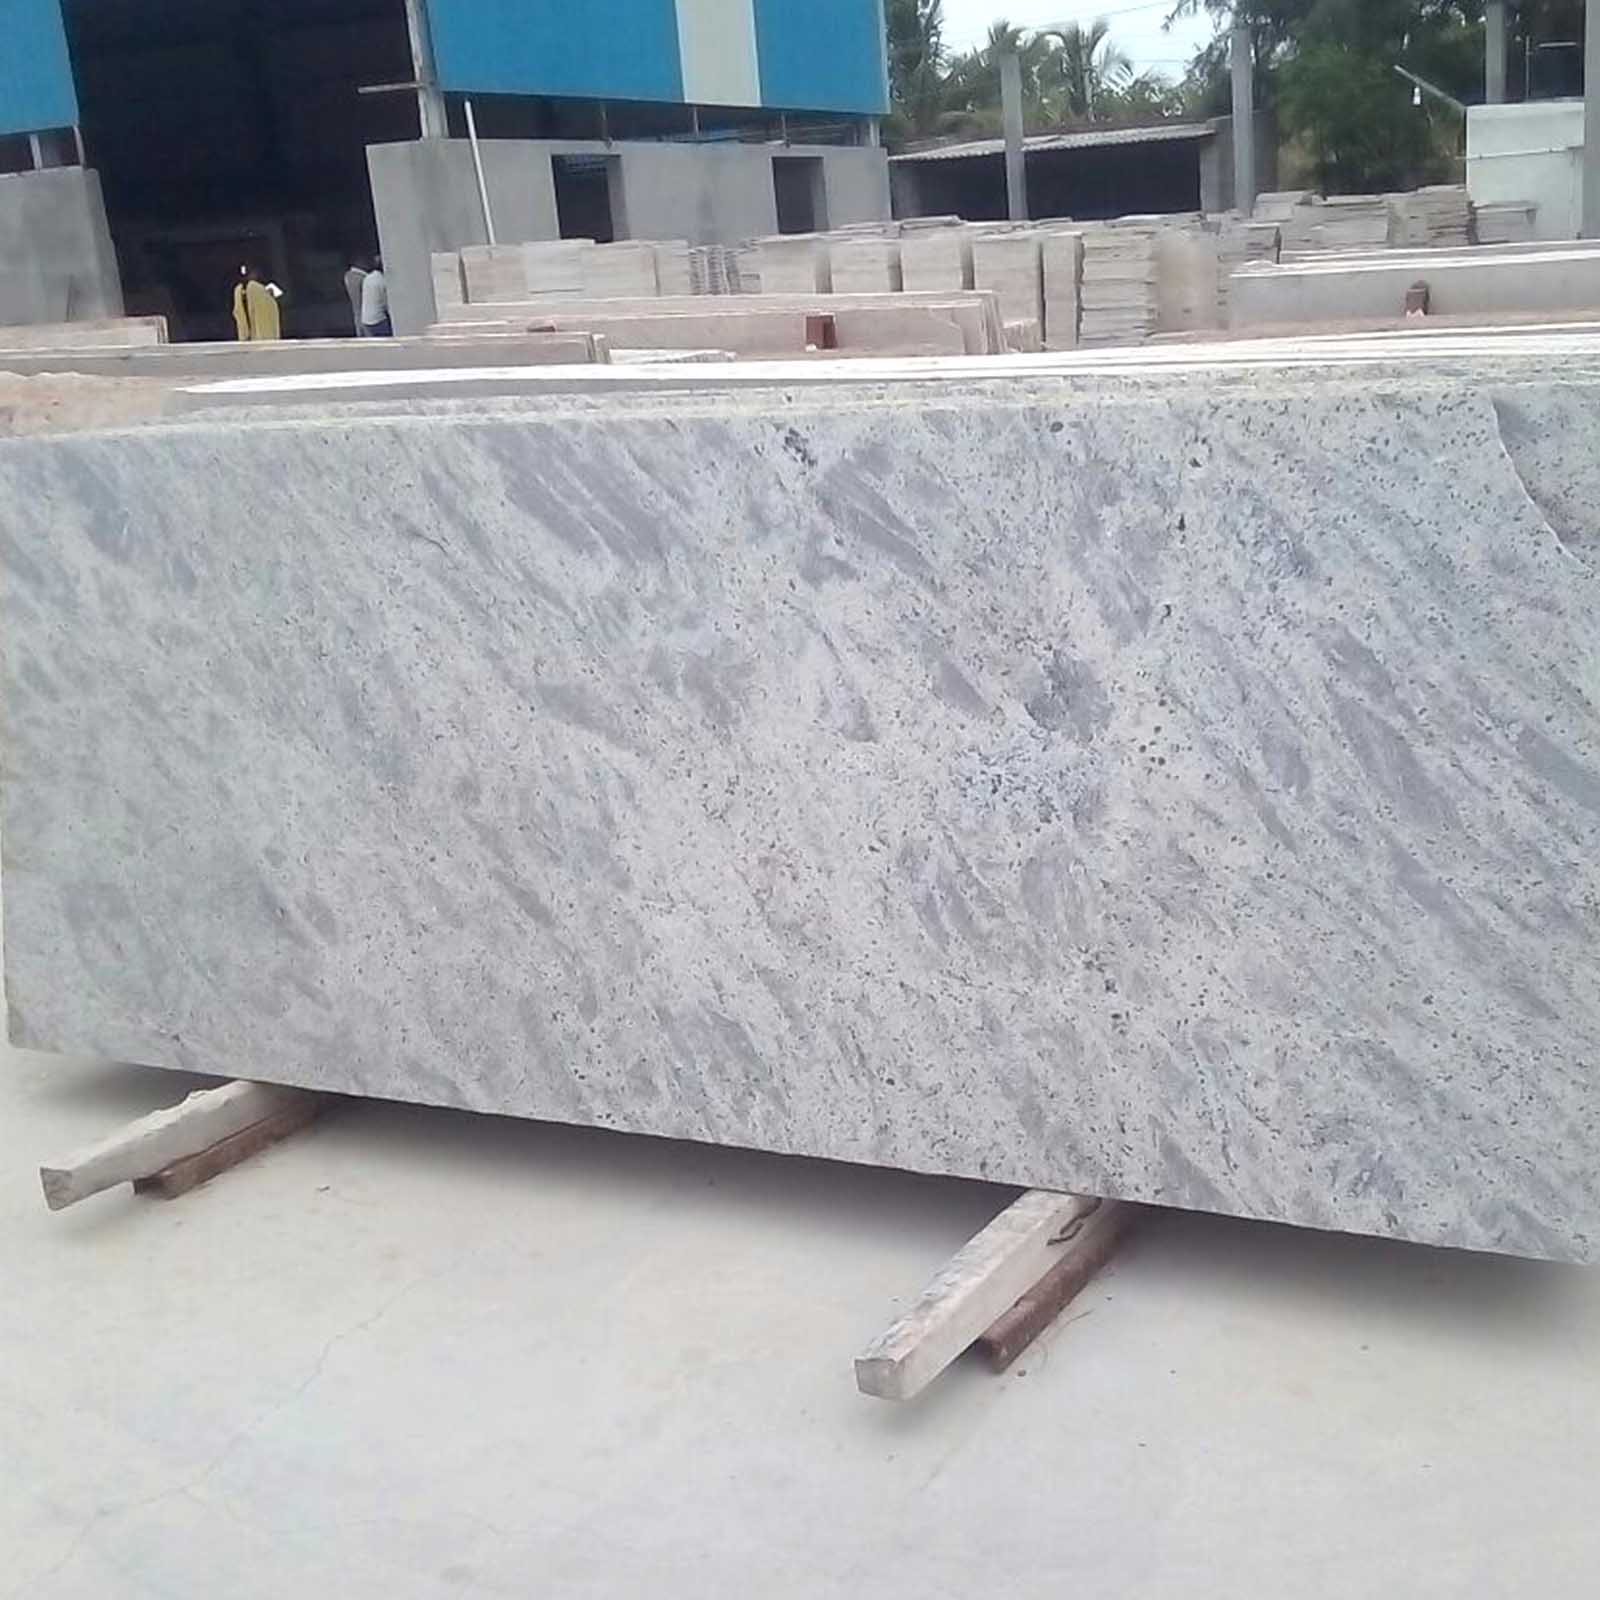 New Kashmir White Granite Tiles And Slab From Indian Granite Supplier